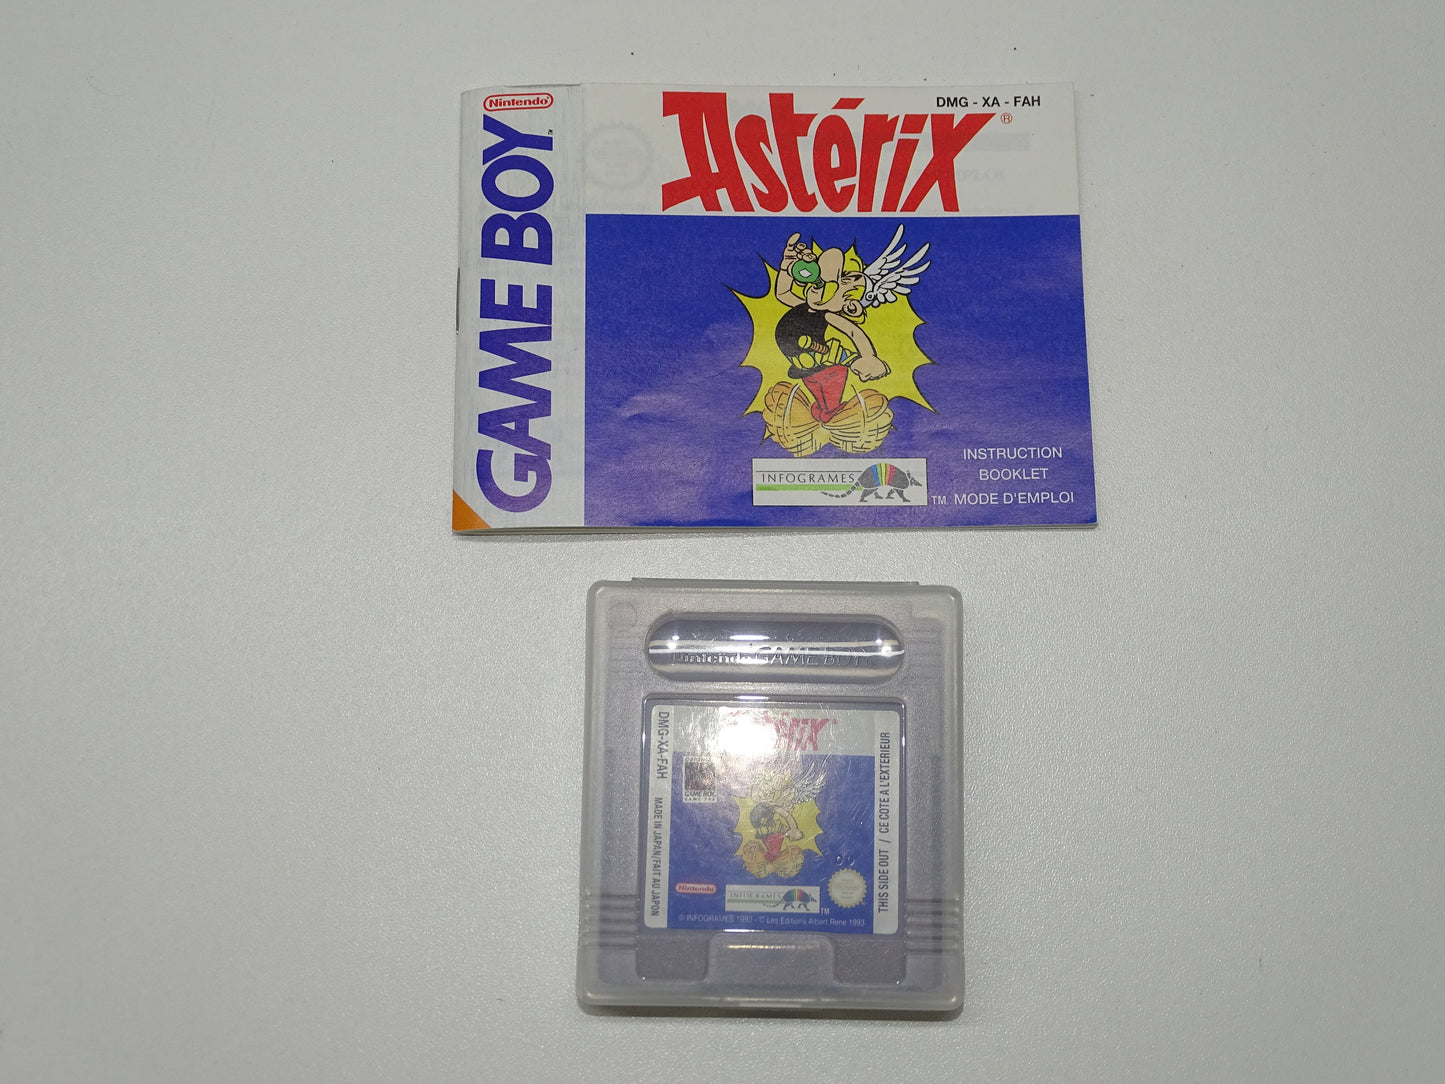 Game Boy Spel: Asterix, 1993